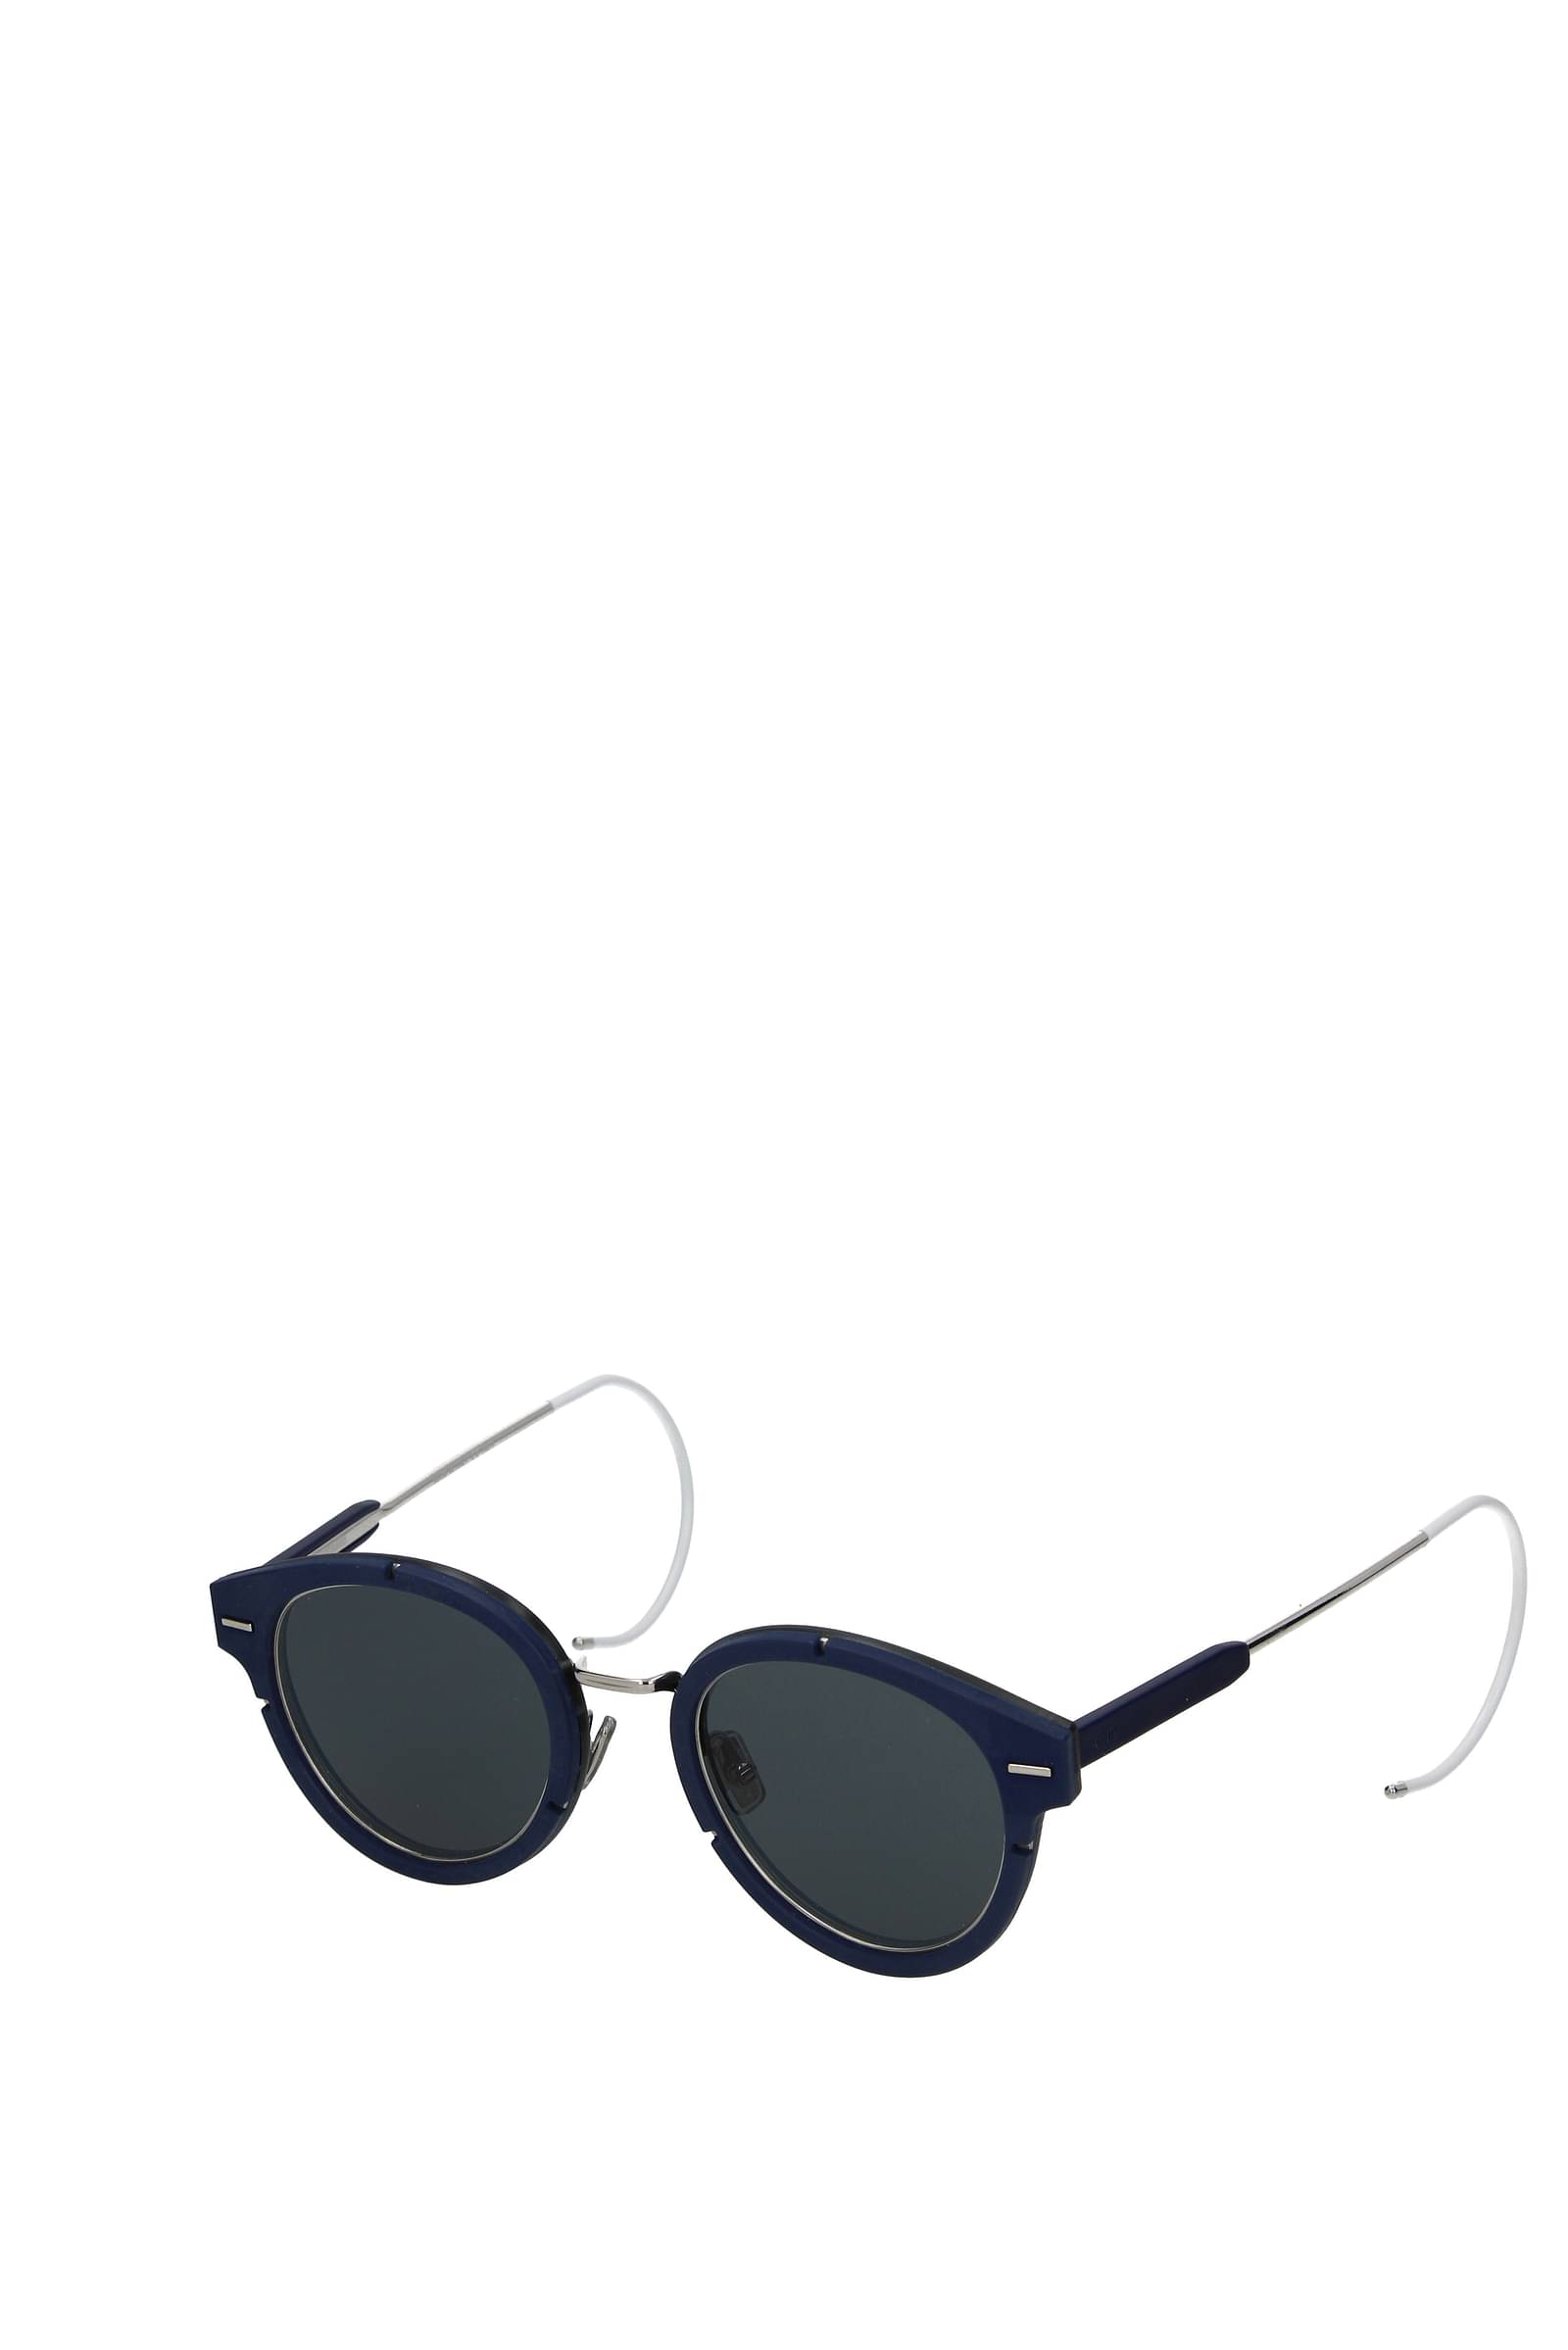 Sunglasses Rubber Blue White - Christian Dior - Men